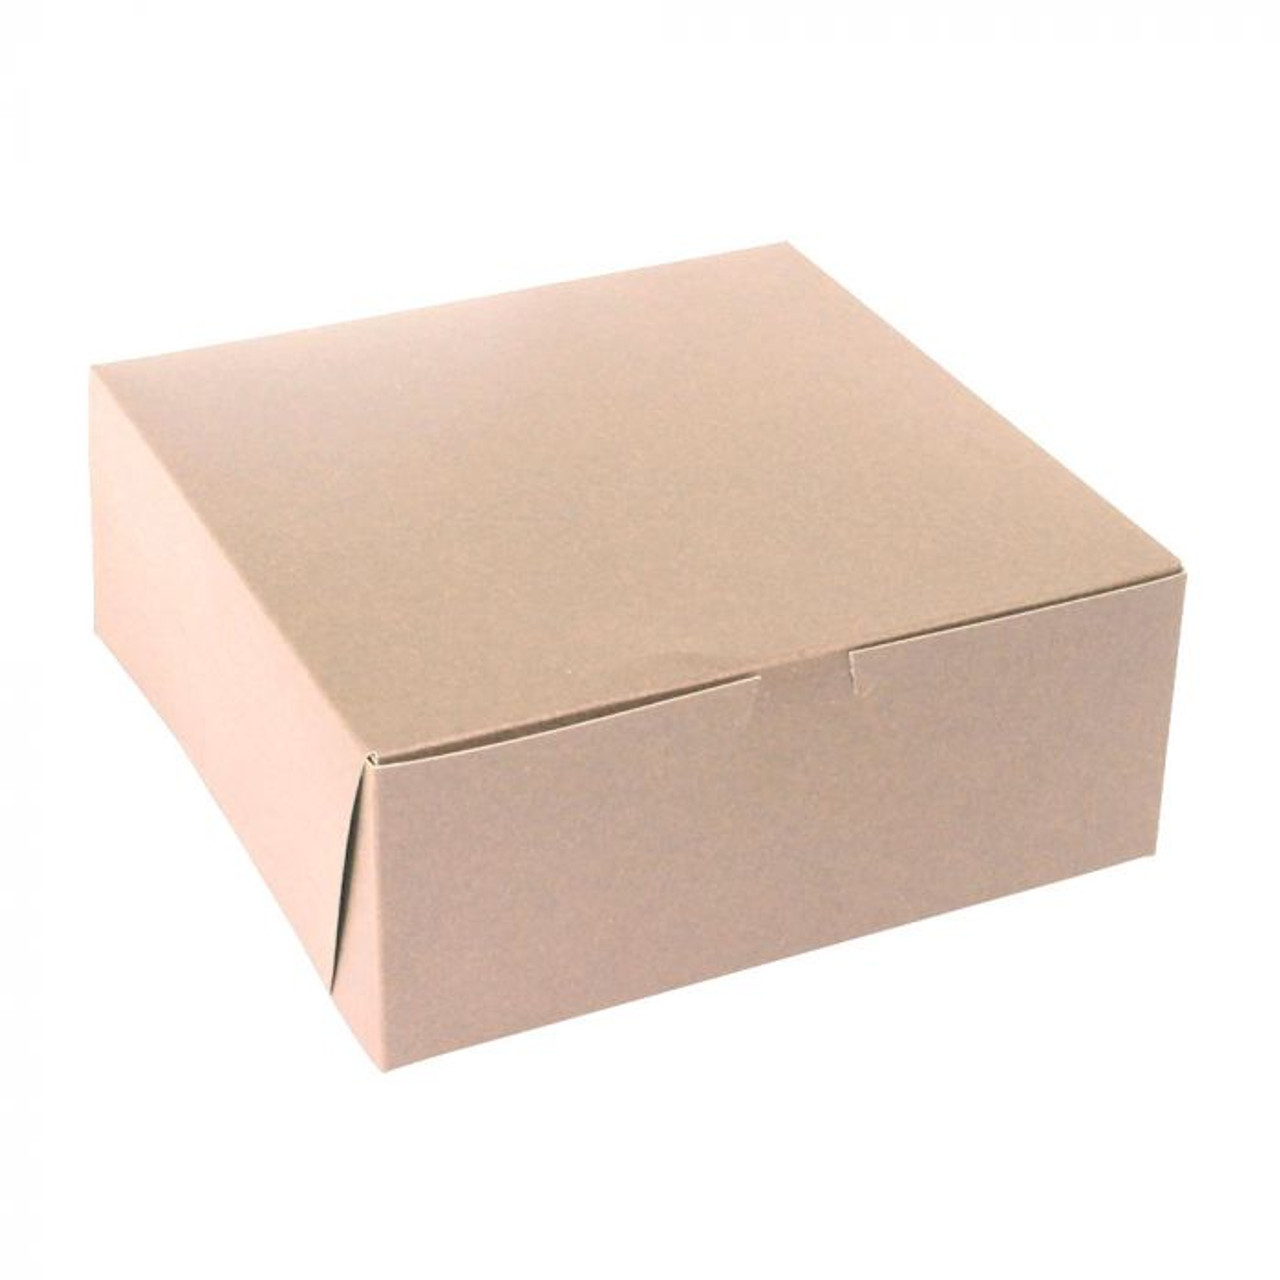 10" x 10" x 5" Kraft Cupcake Bakery Box to fit 6 Regular Cupcakes per 100